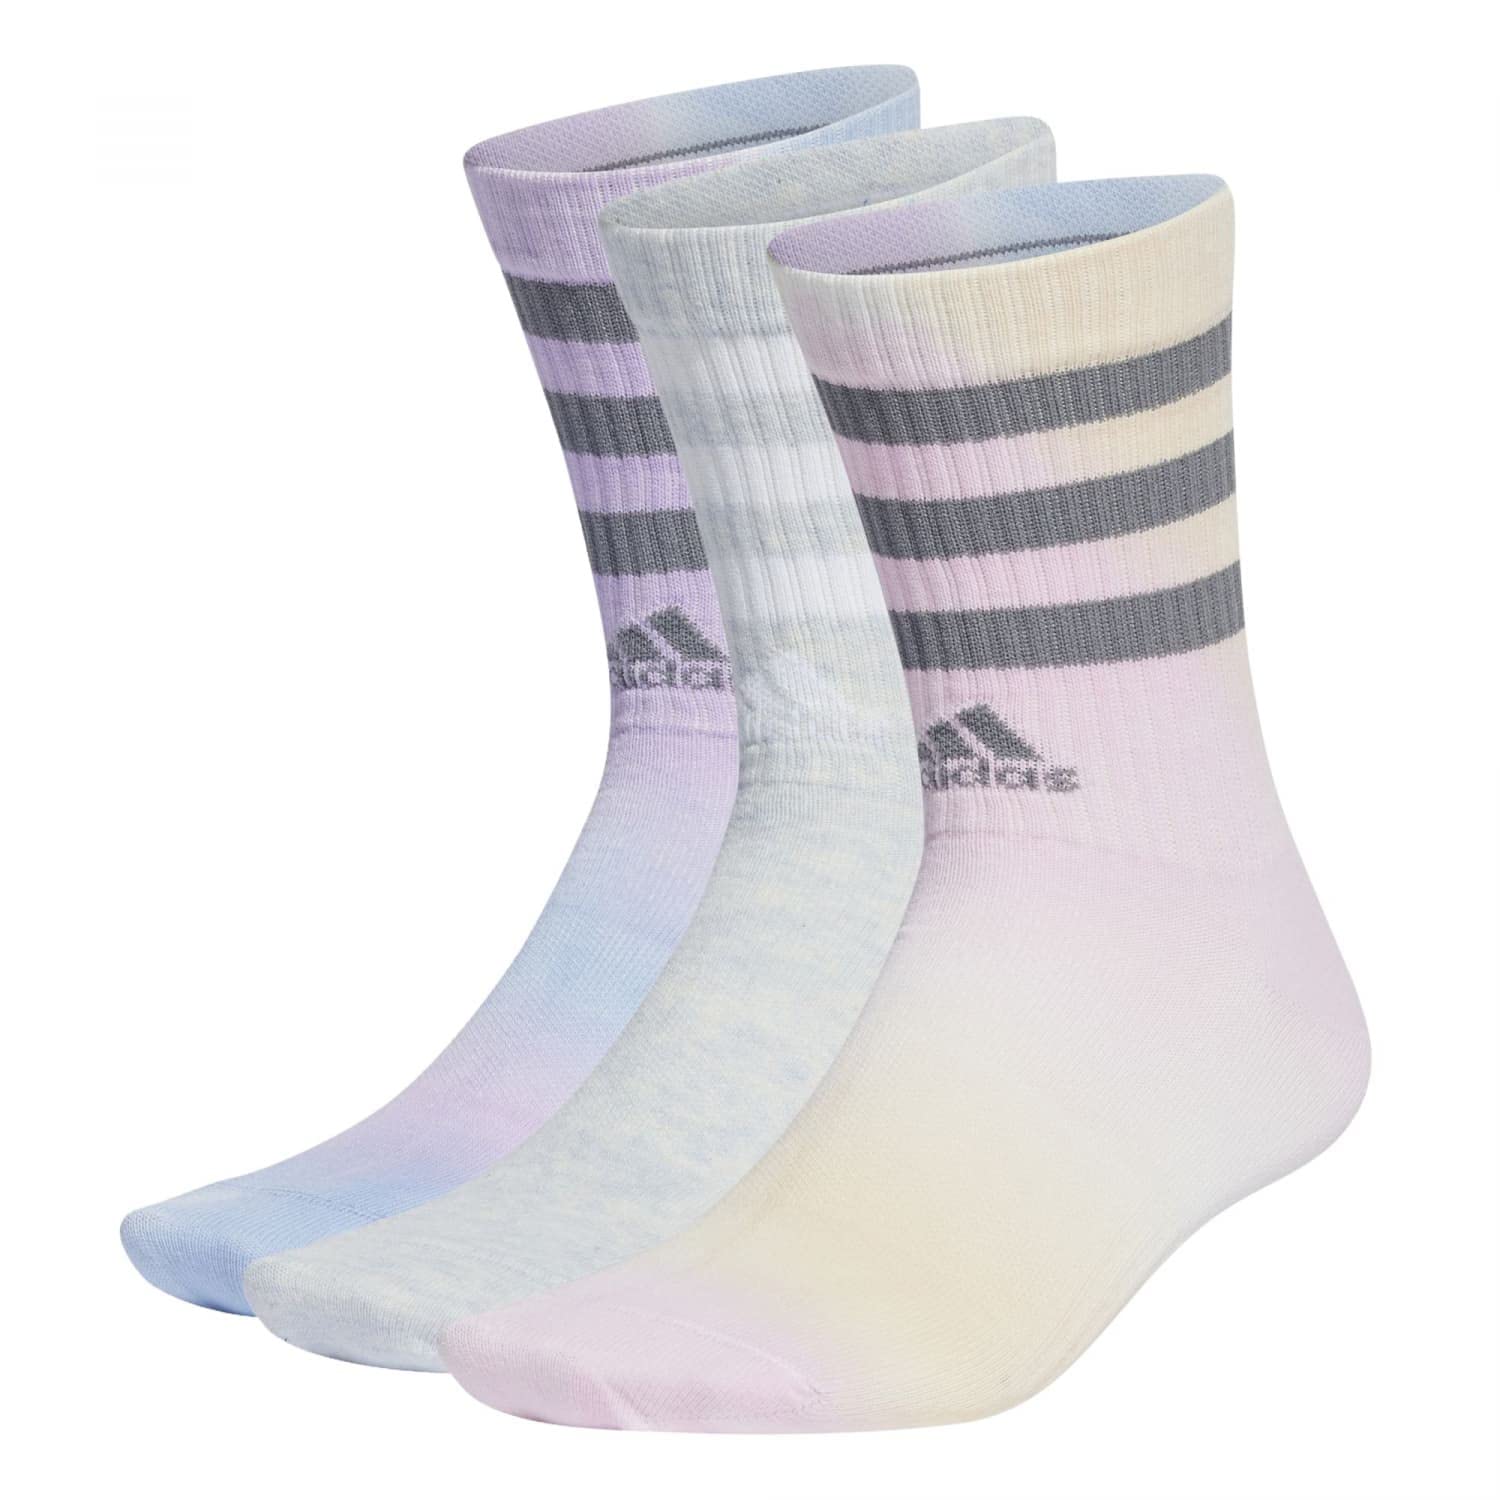 Adidas, 3S C Crw Dye 3P, Socken, Weiß/Weiß/Haloblau, Xxl, Unisex-Adult